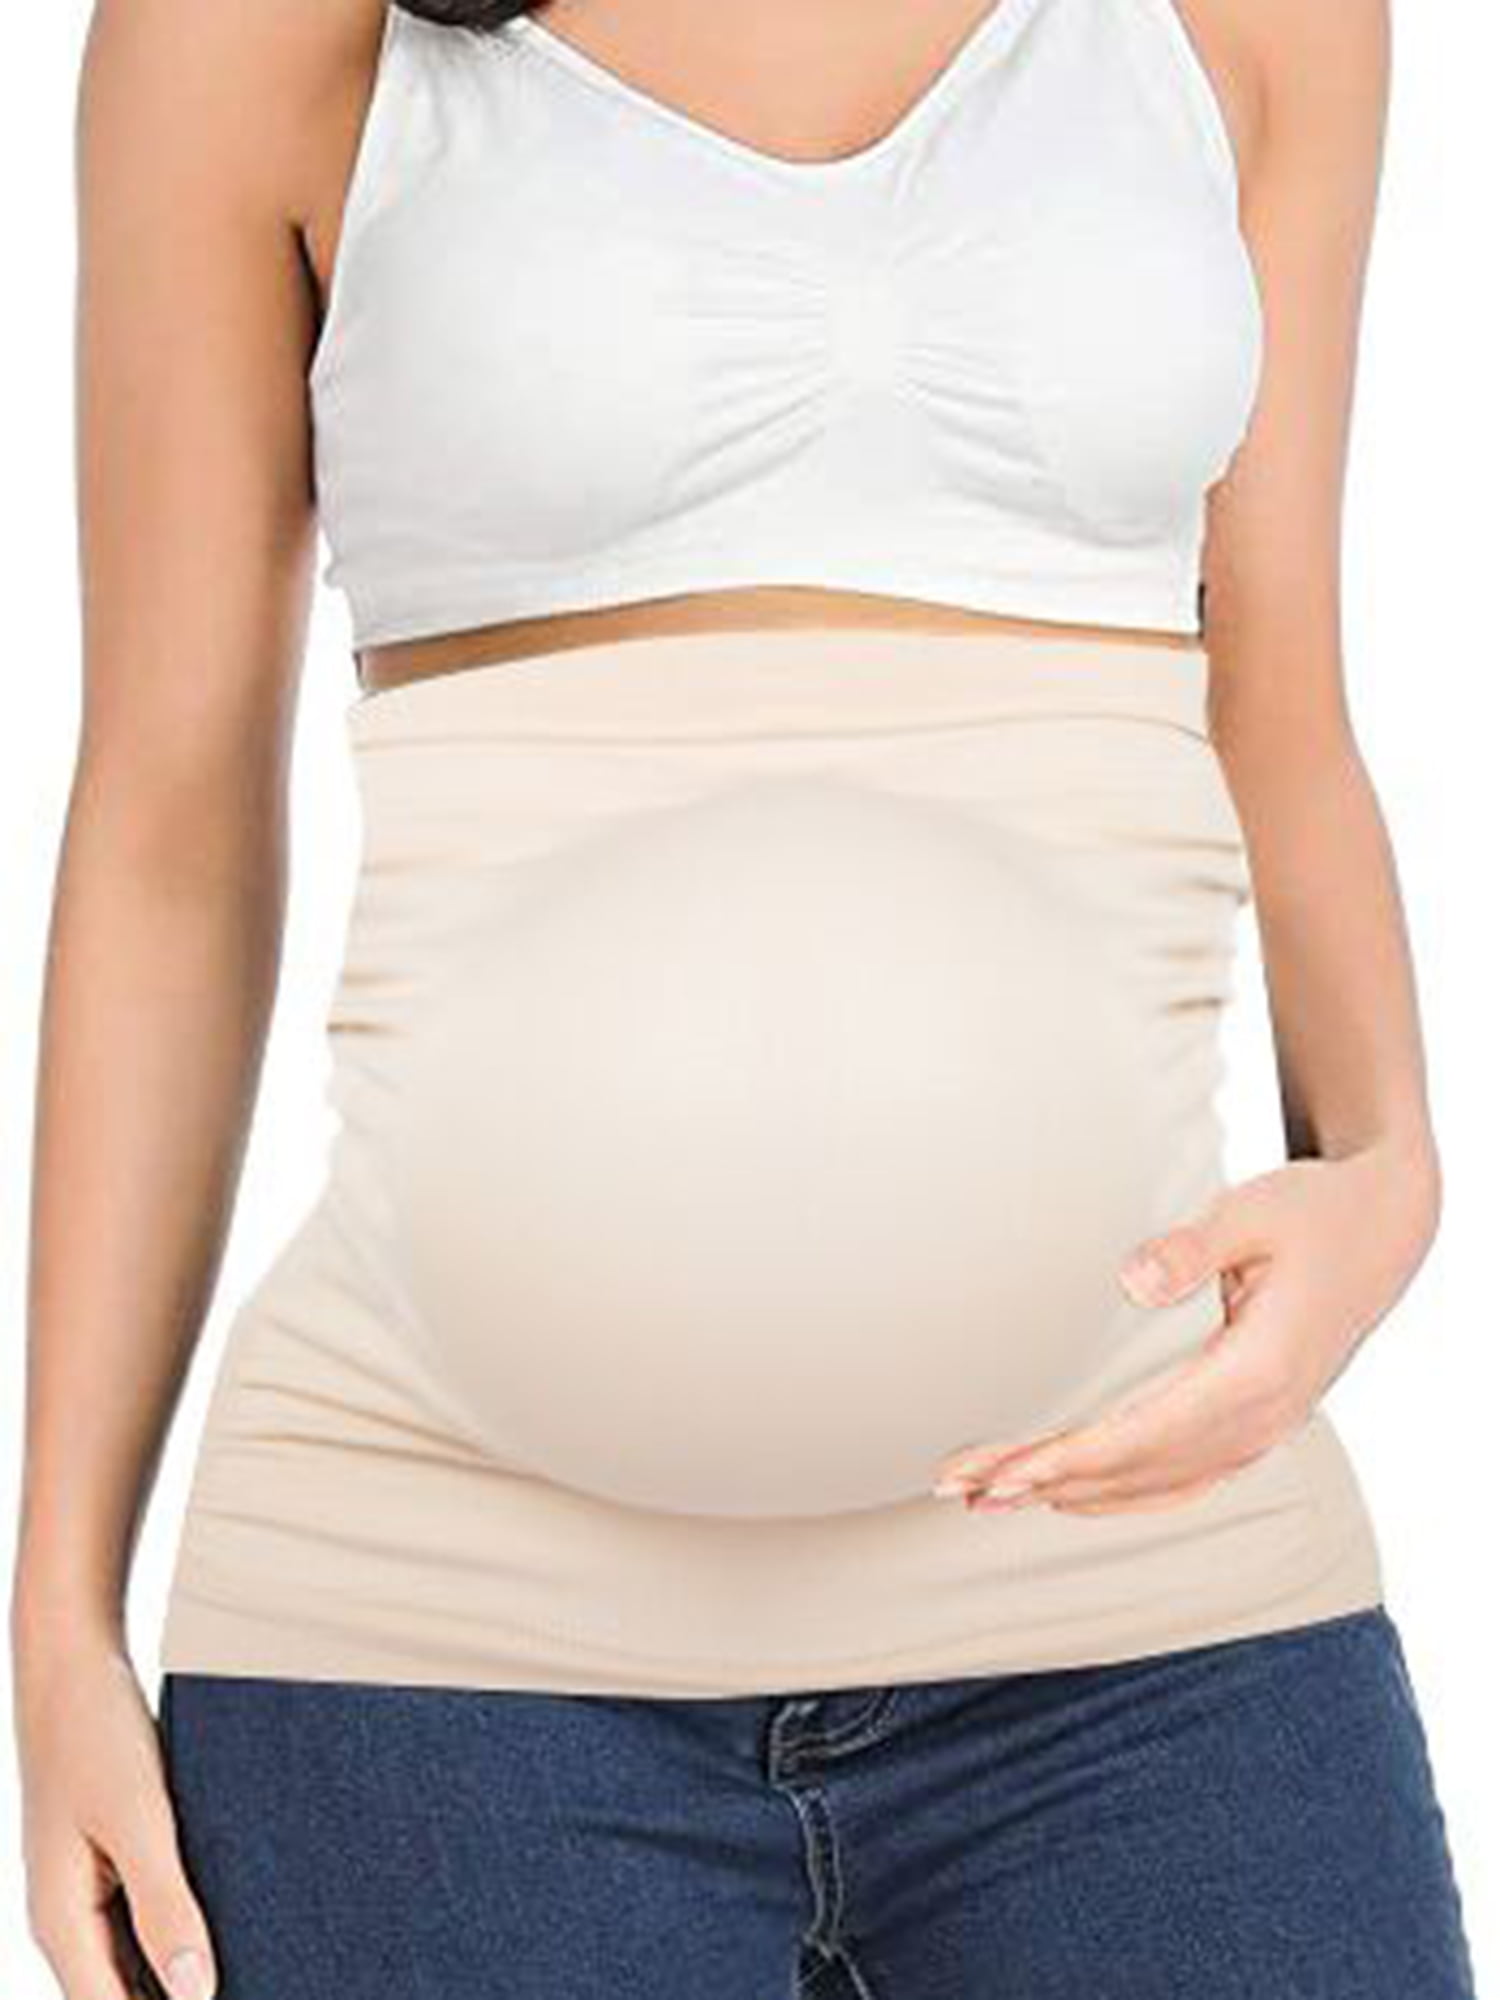 Lelinta - SAYFUT Plus Size Maternity Belly Band Women Abdomen Support ...